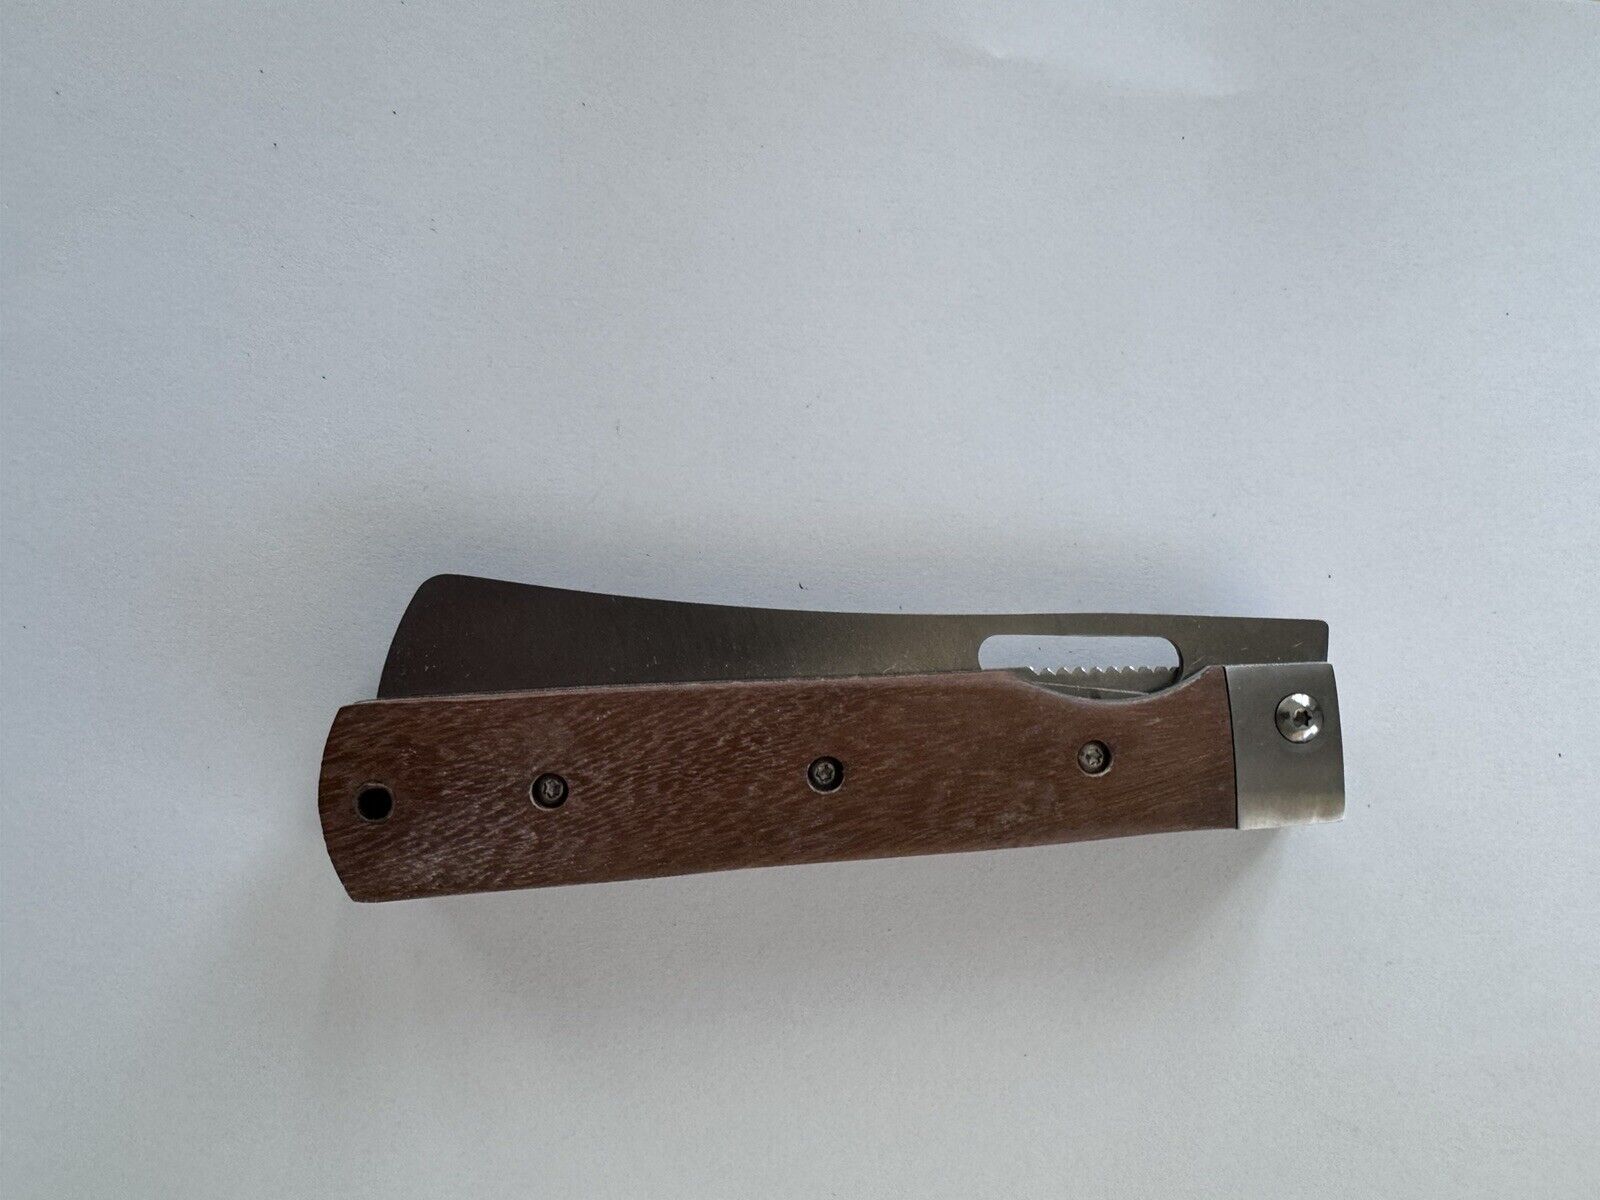 NEW Unique Lockblade Folding Knife